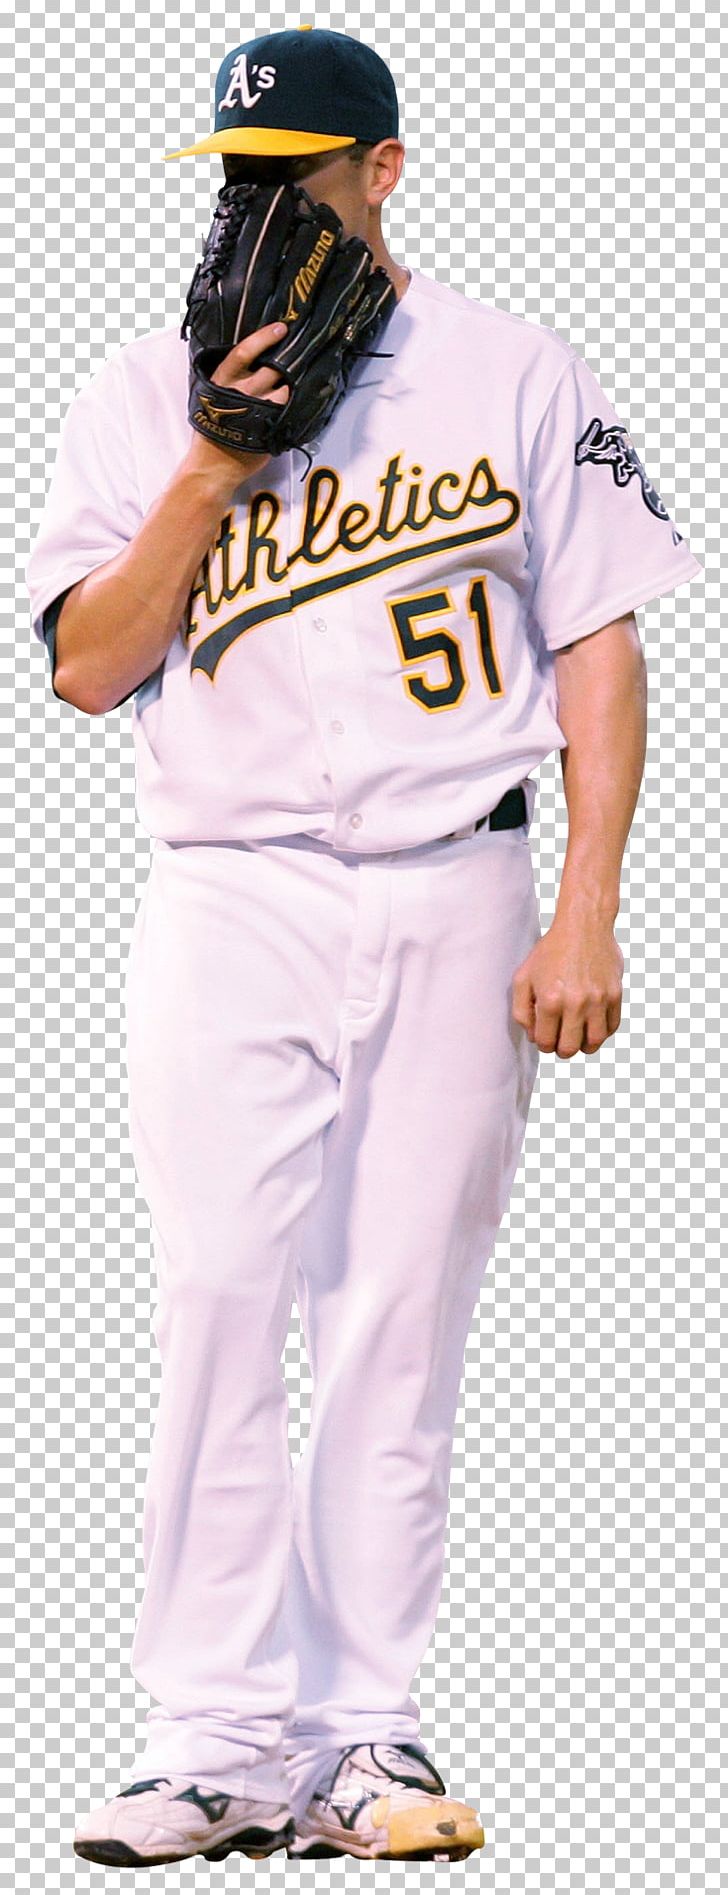 Oakland Athletics Baseball Uniform Jersey Clothing PNG, Clipart, Ball Game, Baseball, Baseball Equipment, Baseball Player, Baseball Positions Free PNG Download